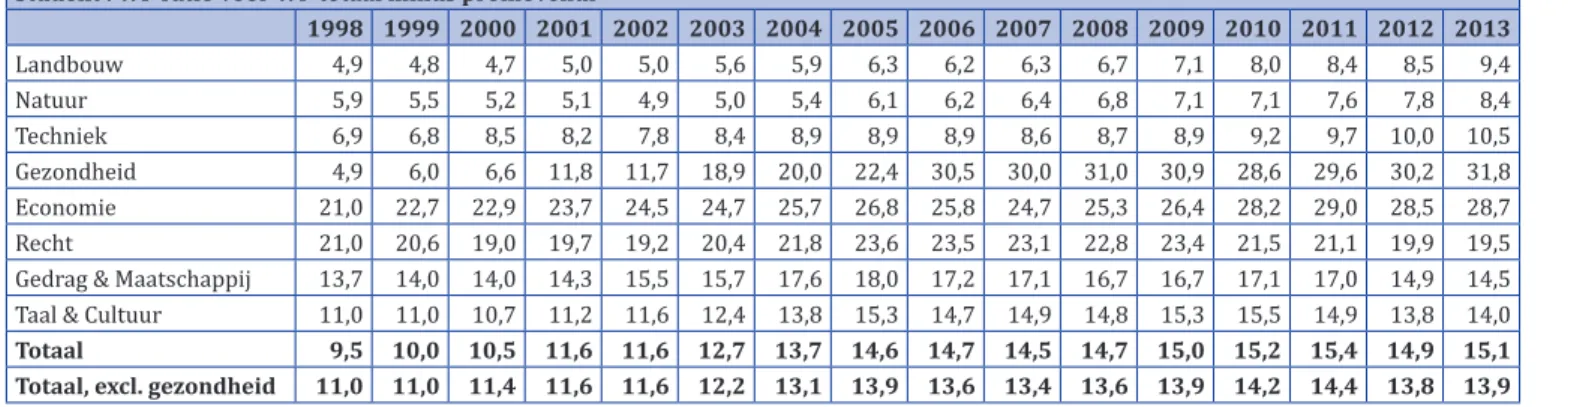 tabel staf-studentenratio 1998-2013